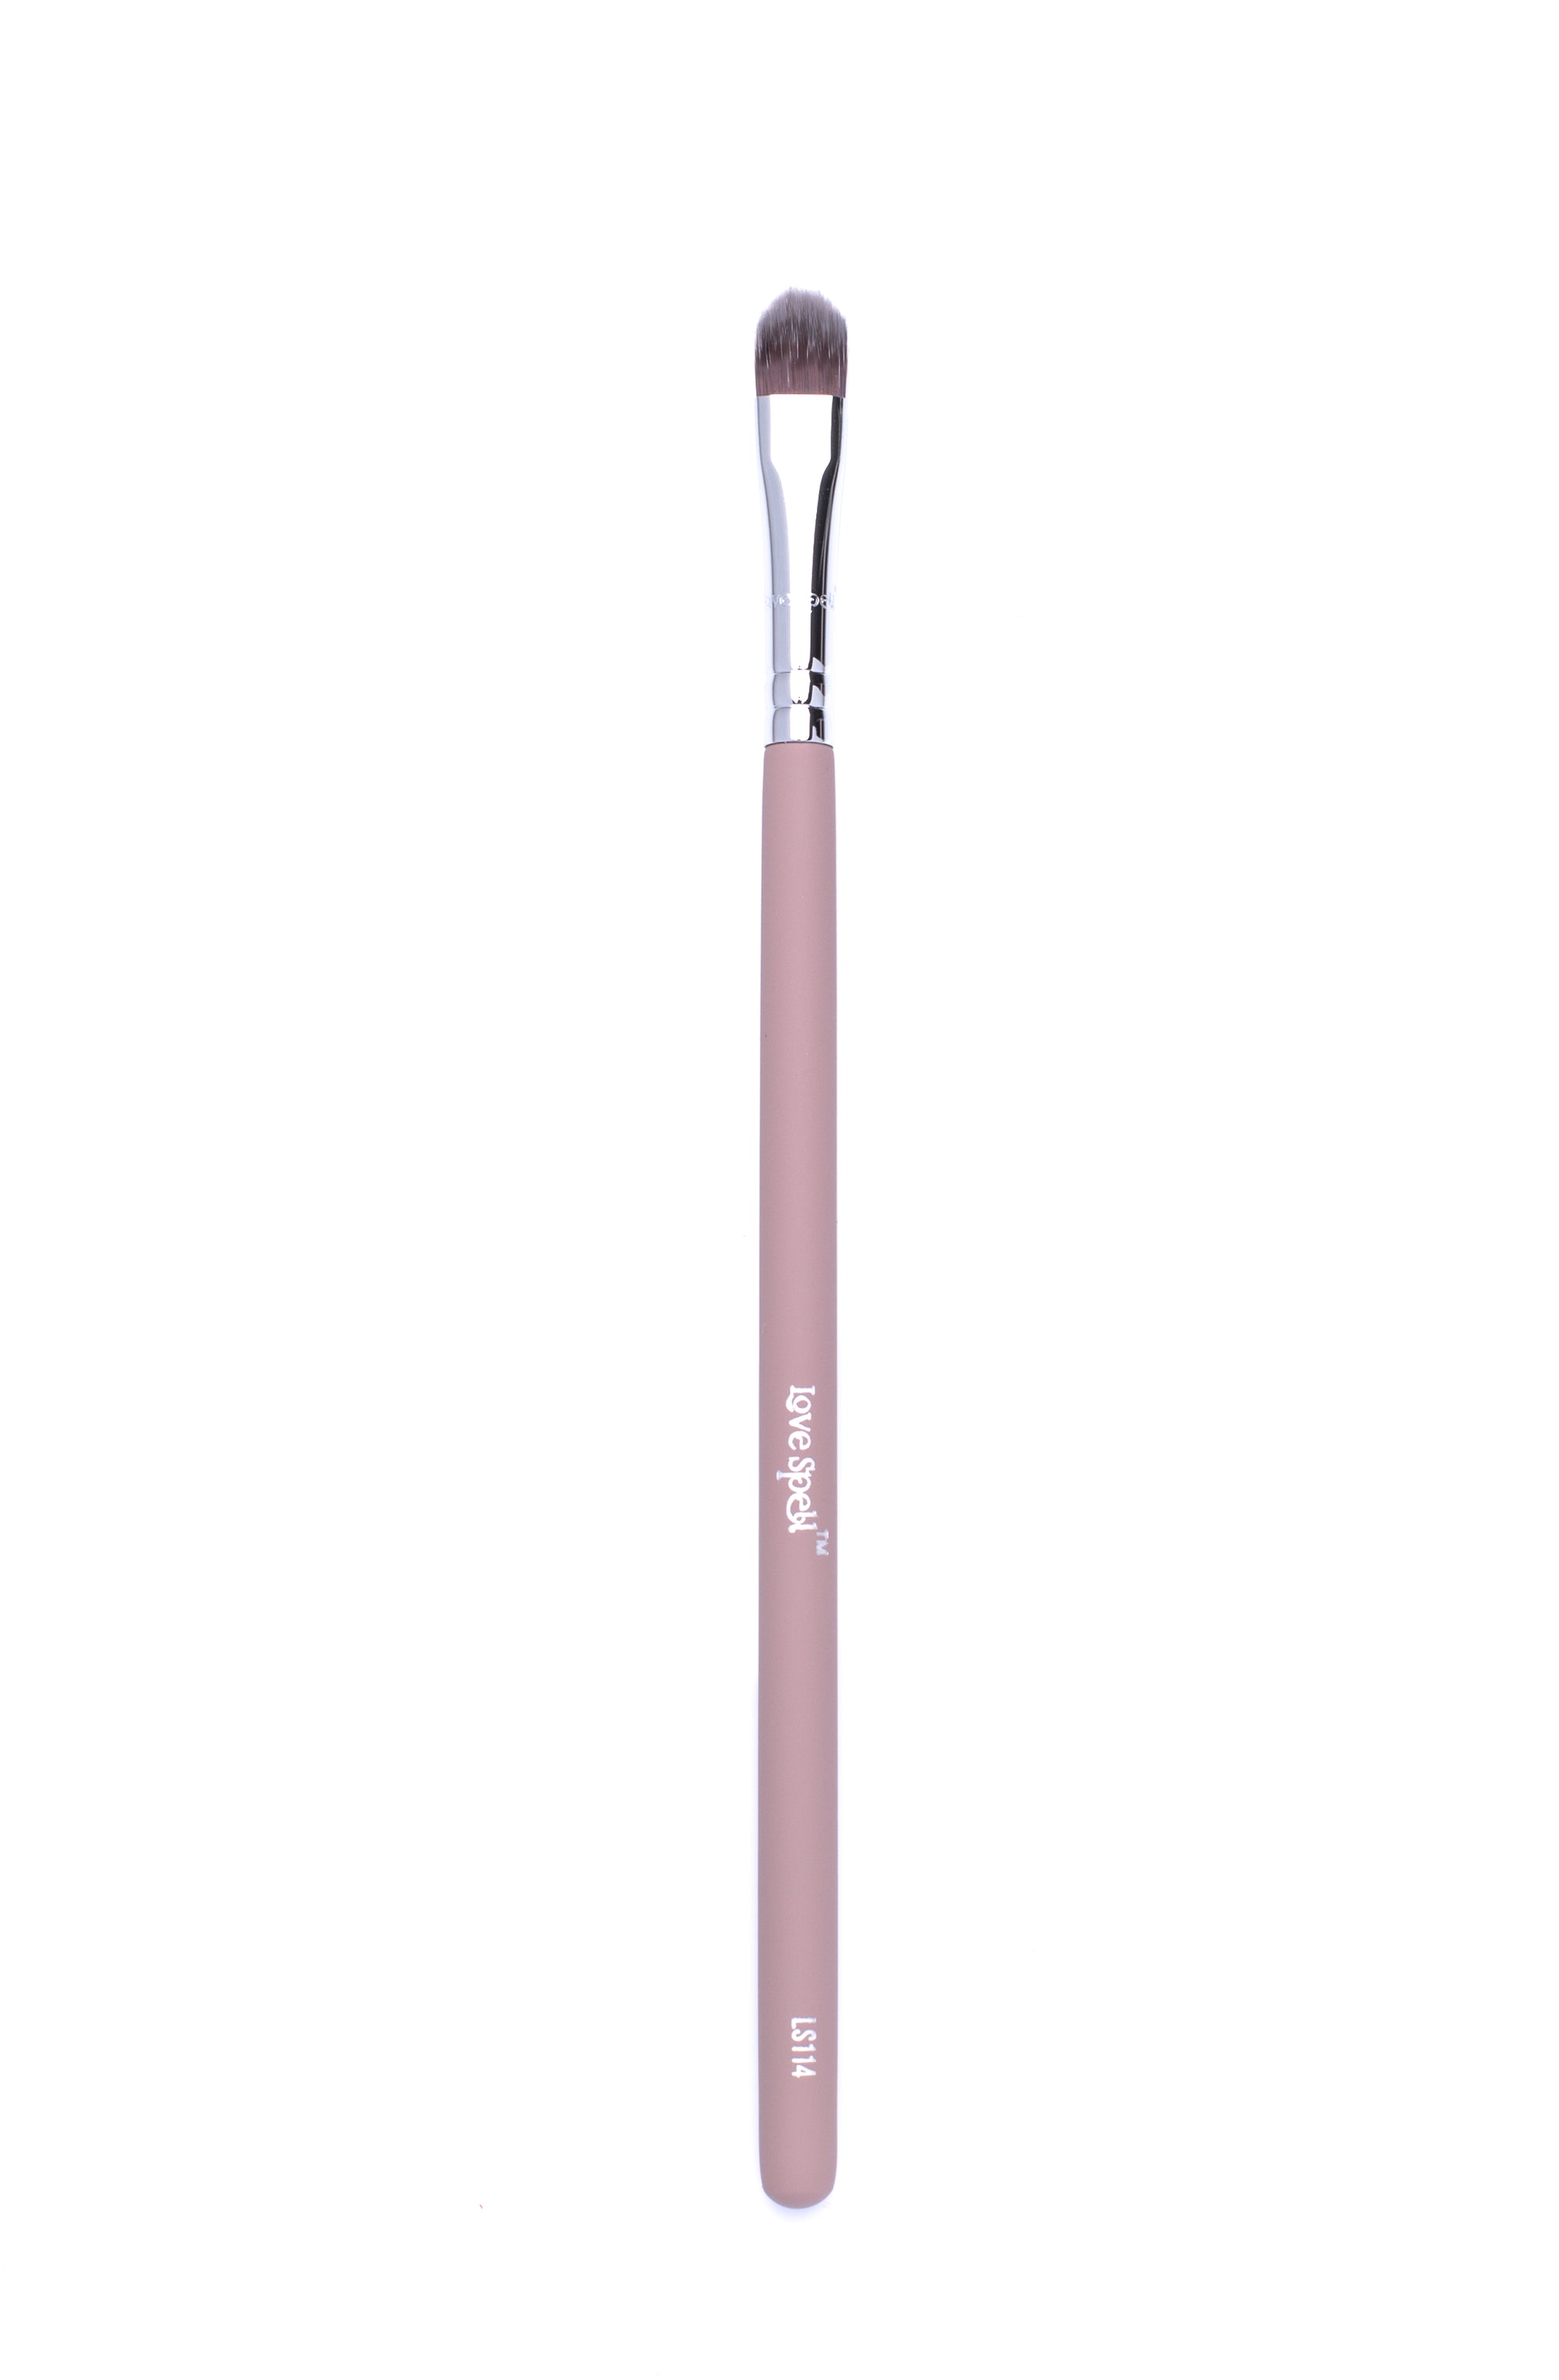 Sally's Spell - LS 114 small concealer brush